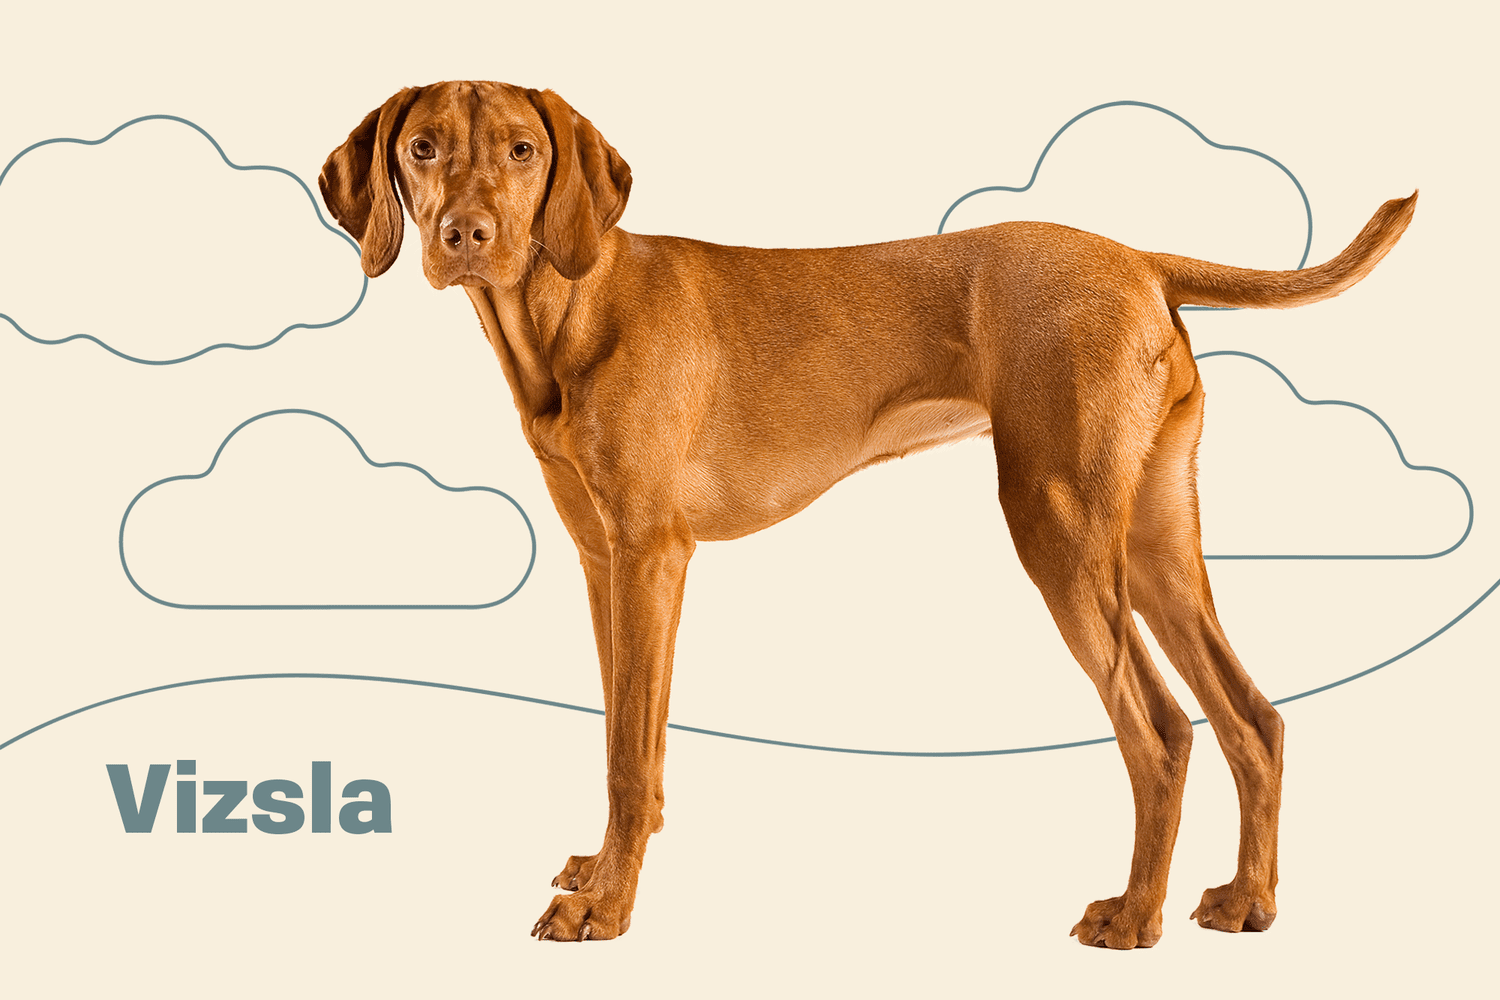 Vizsla Dog Breed Information Characteristics Daily Paws